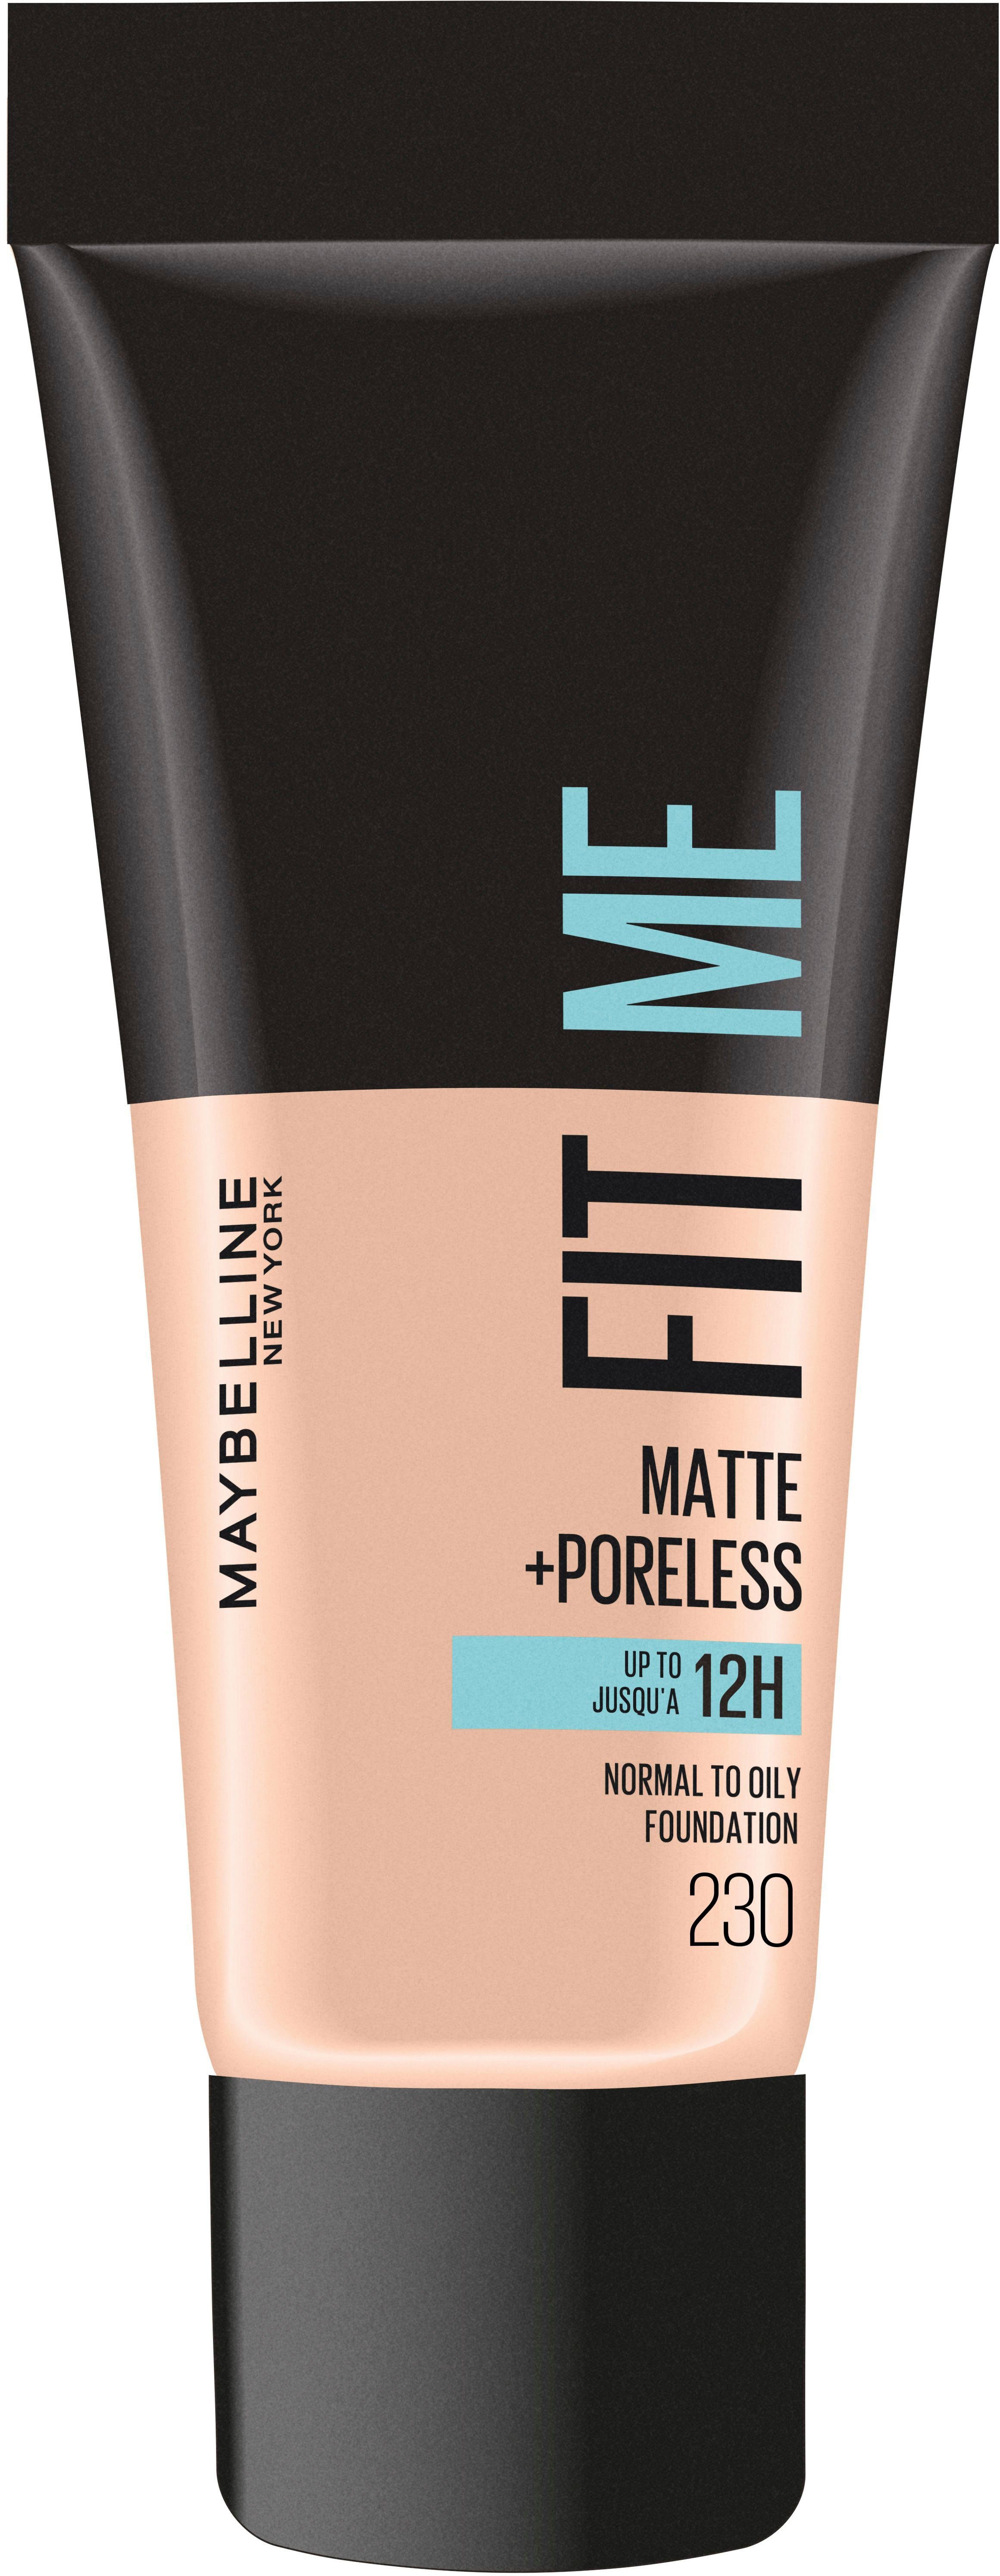 MAYBELLINE NEW YORK Foundation York Me! Make-Up New + Poreless Matte Fit Maybelline